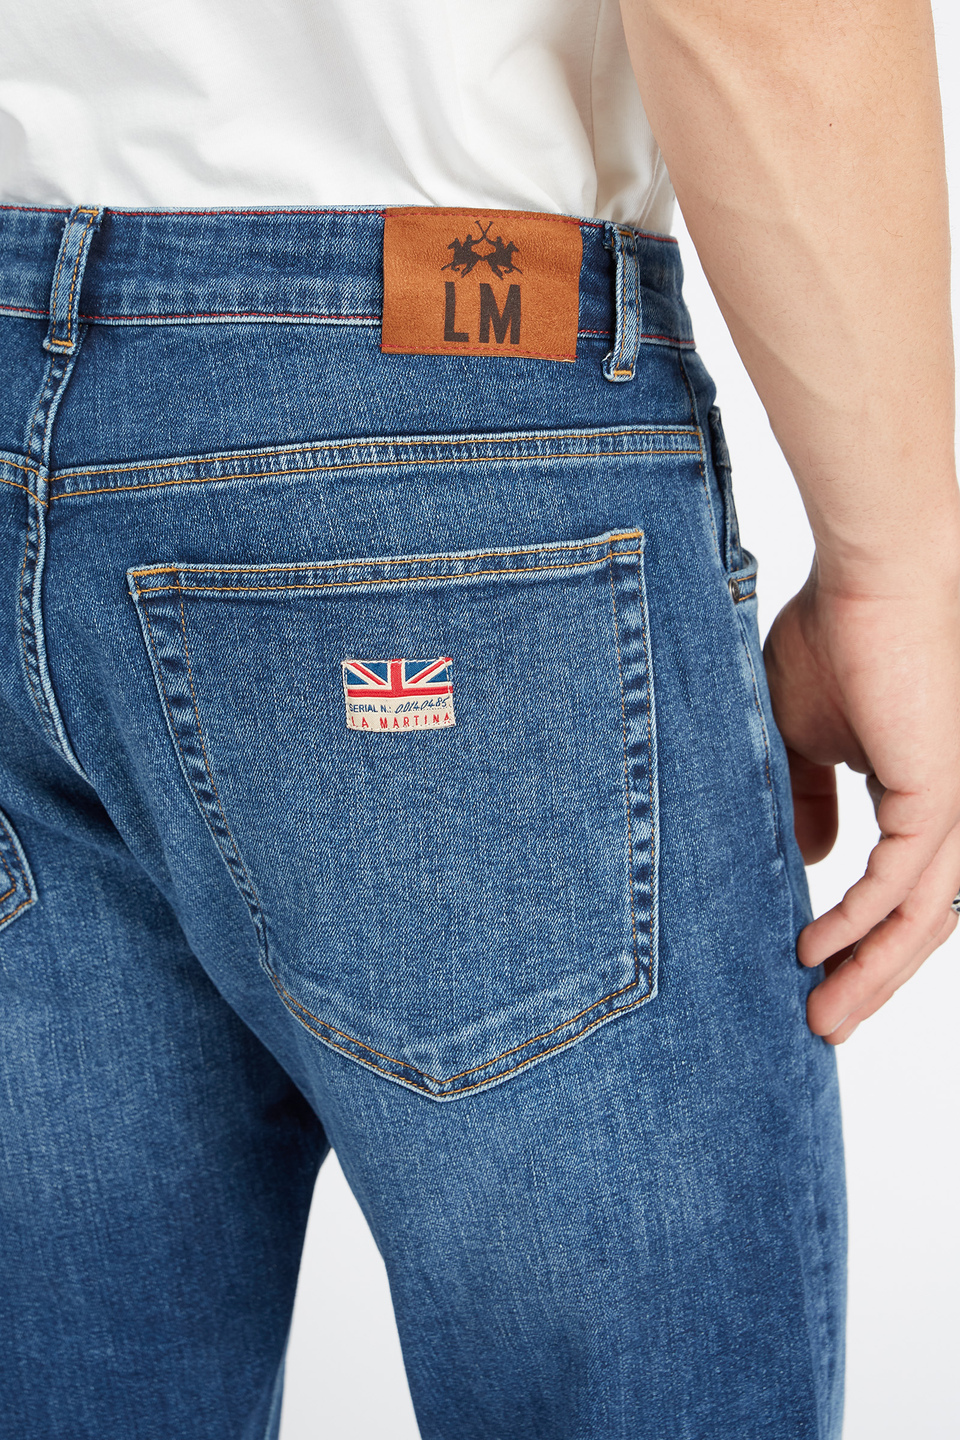 Pantalone jeans denim uomo 5 tasche Polo Academy - Vidal | La Martina - Official Online Shop